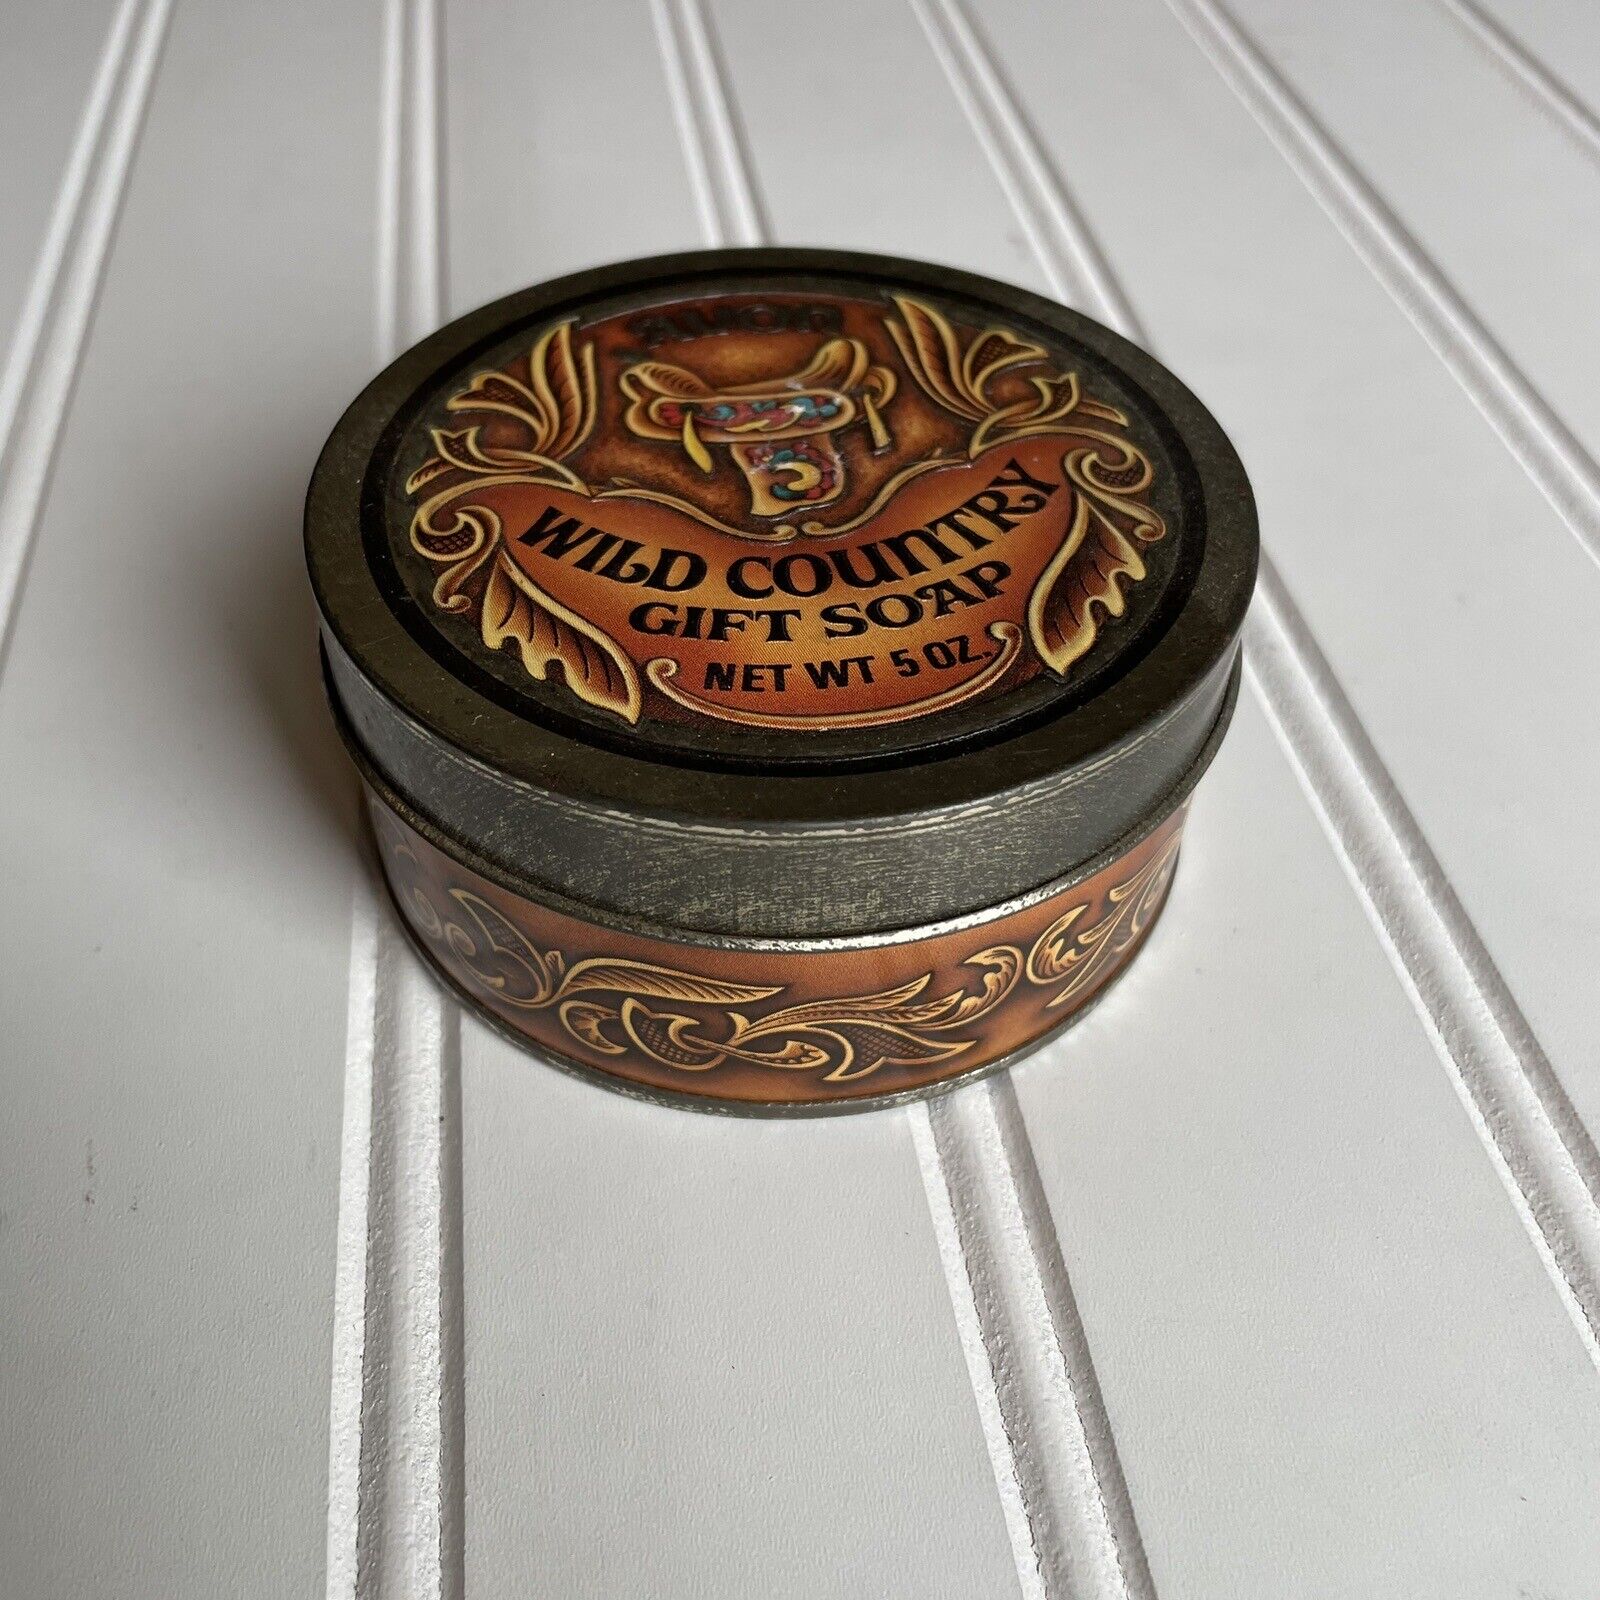 Vintage Avon Wild Country Gift Soap Trinket Tin Box Fragrance Man Cave Decor Без бренда - фотография #2